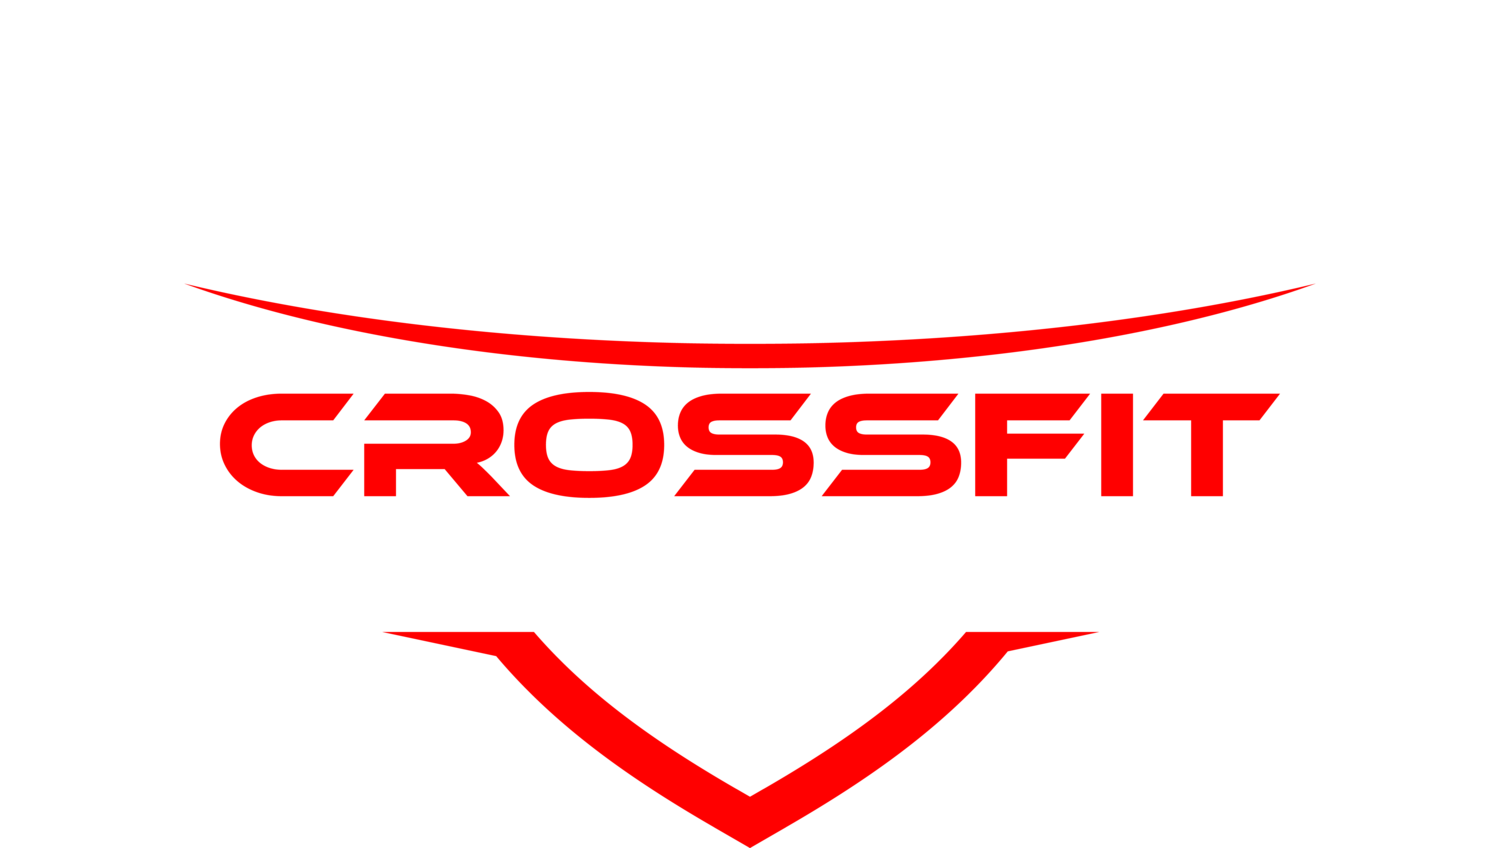 CrossFit Sunderland 